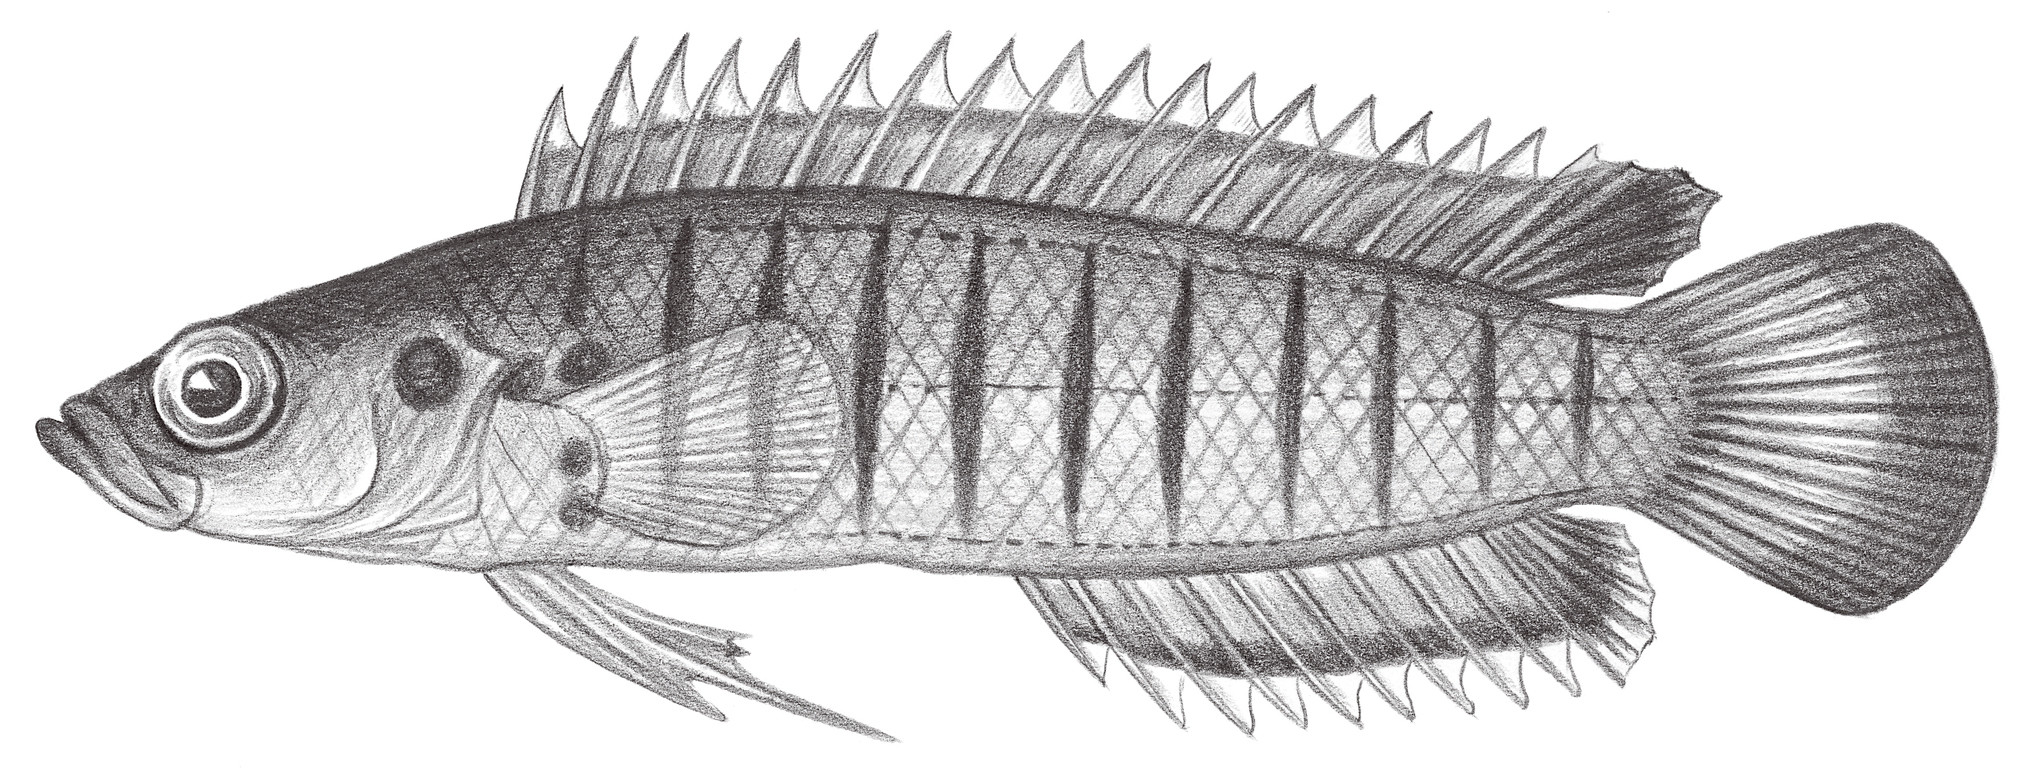 1117.	橫帶針鰭鮗 Belonepterygion fascialatum (Ogilby, 1889)